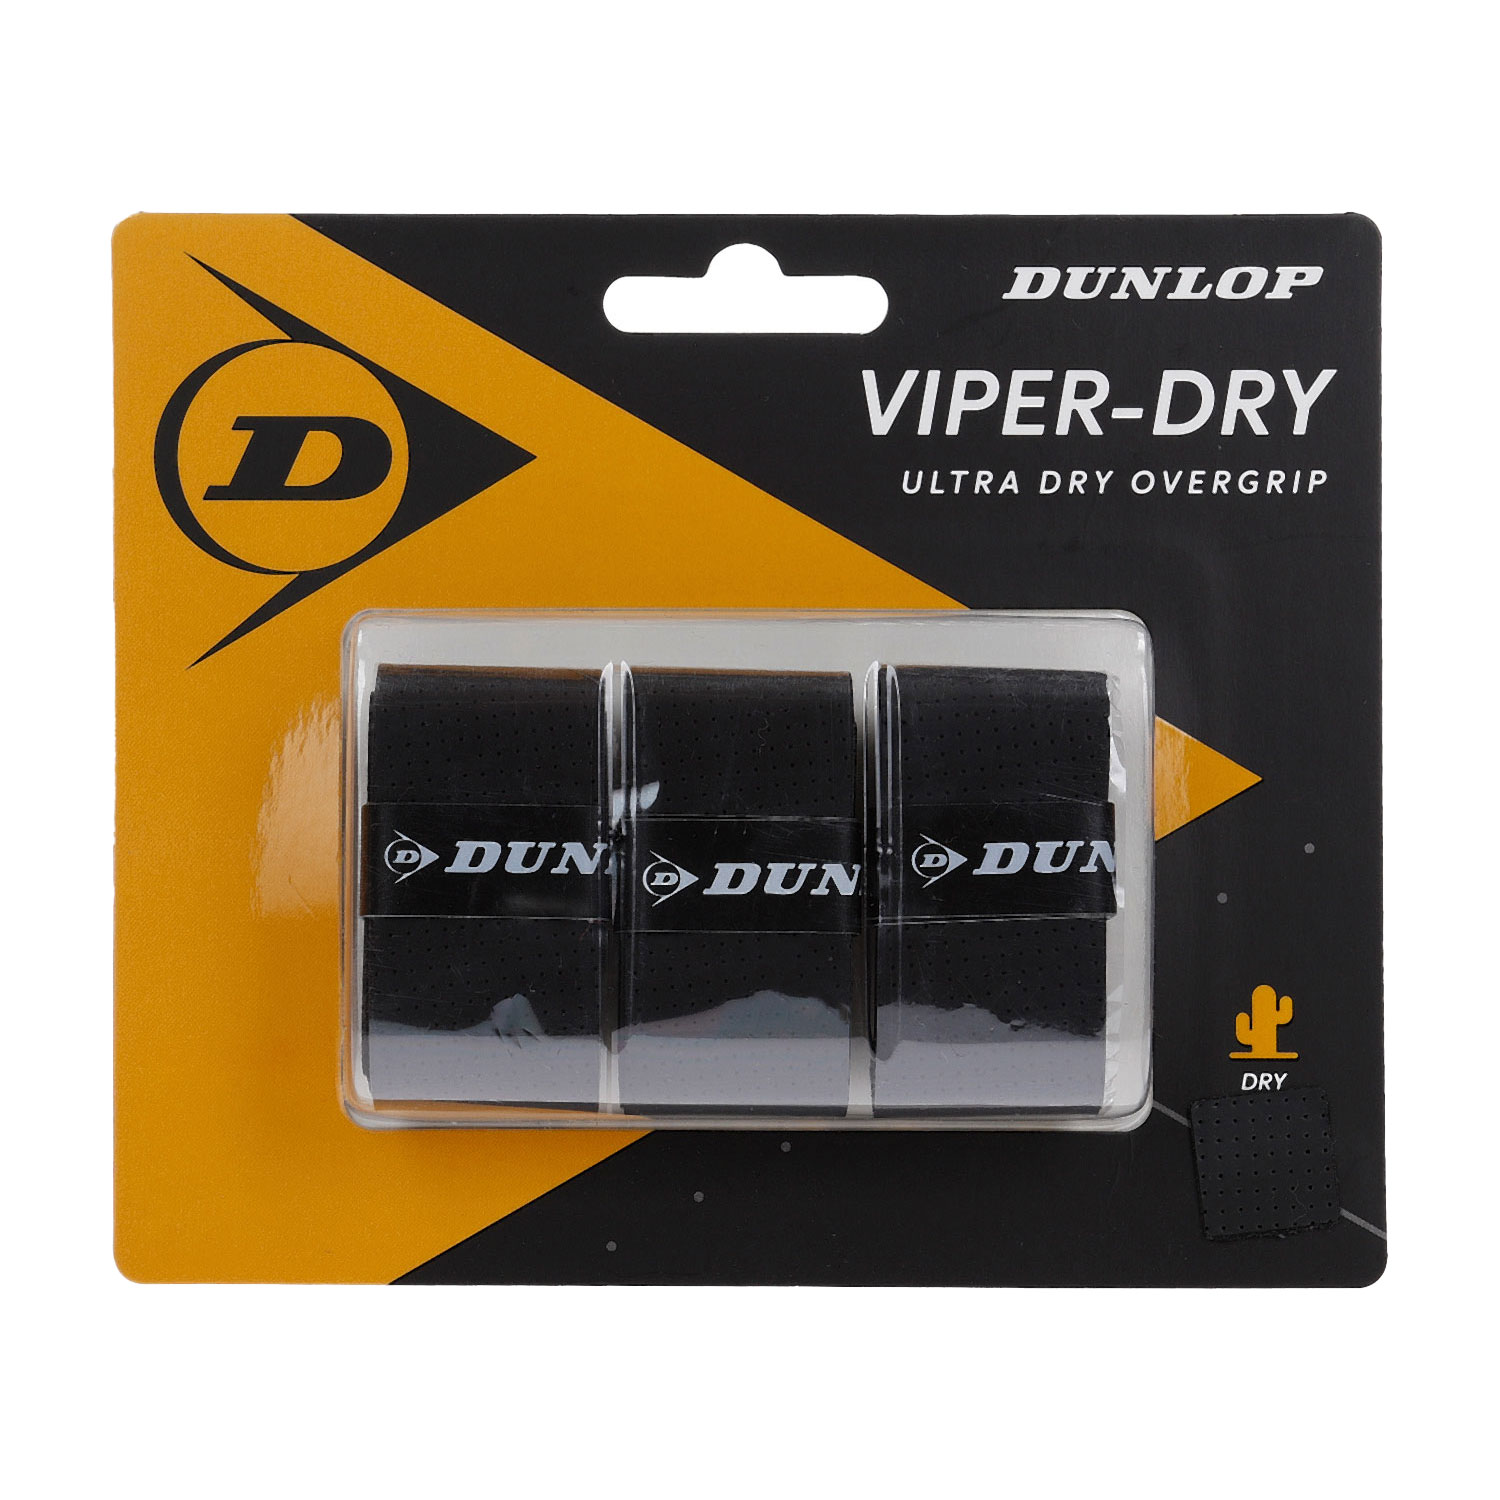 Dunlop ViperDry Overgrip x 3 - Black